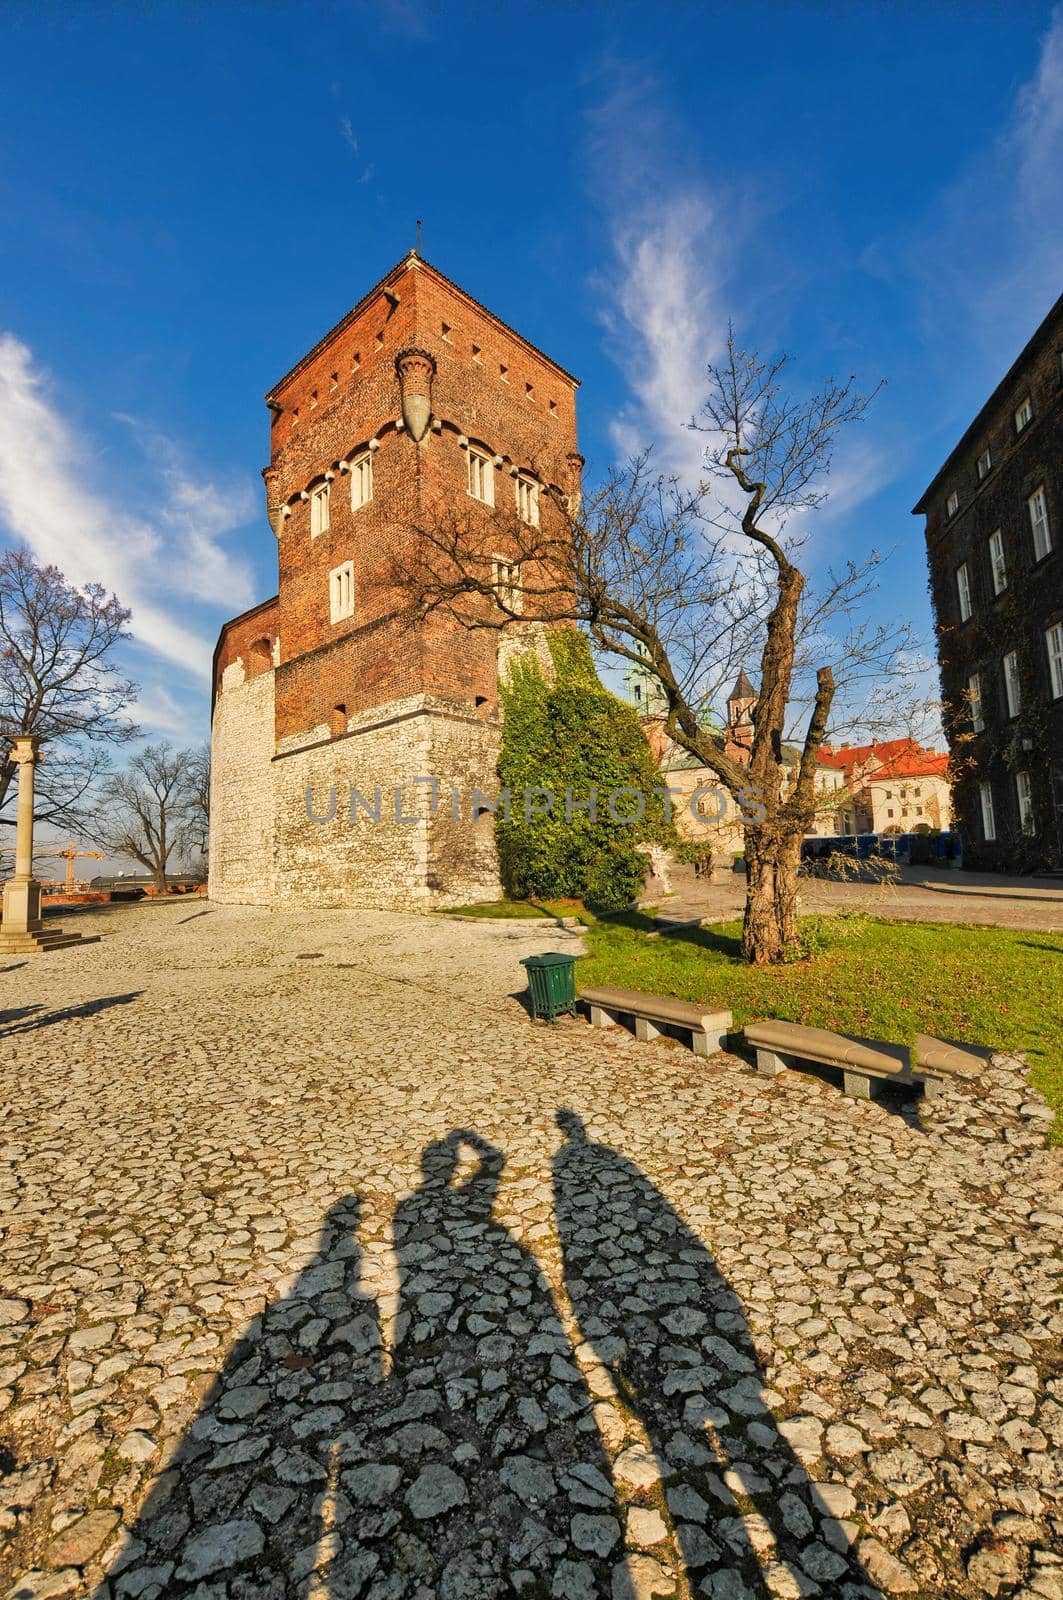 Historic royal Wawel castle in Krakow Poland